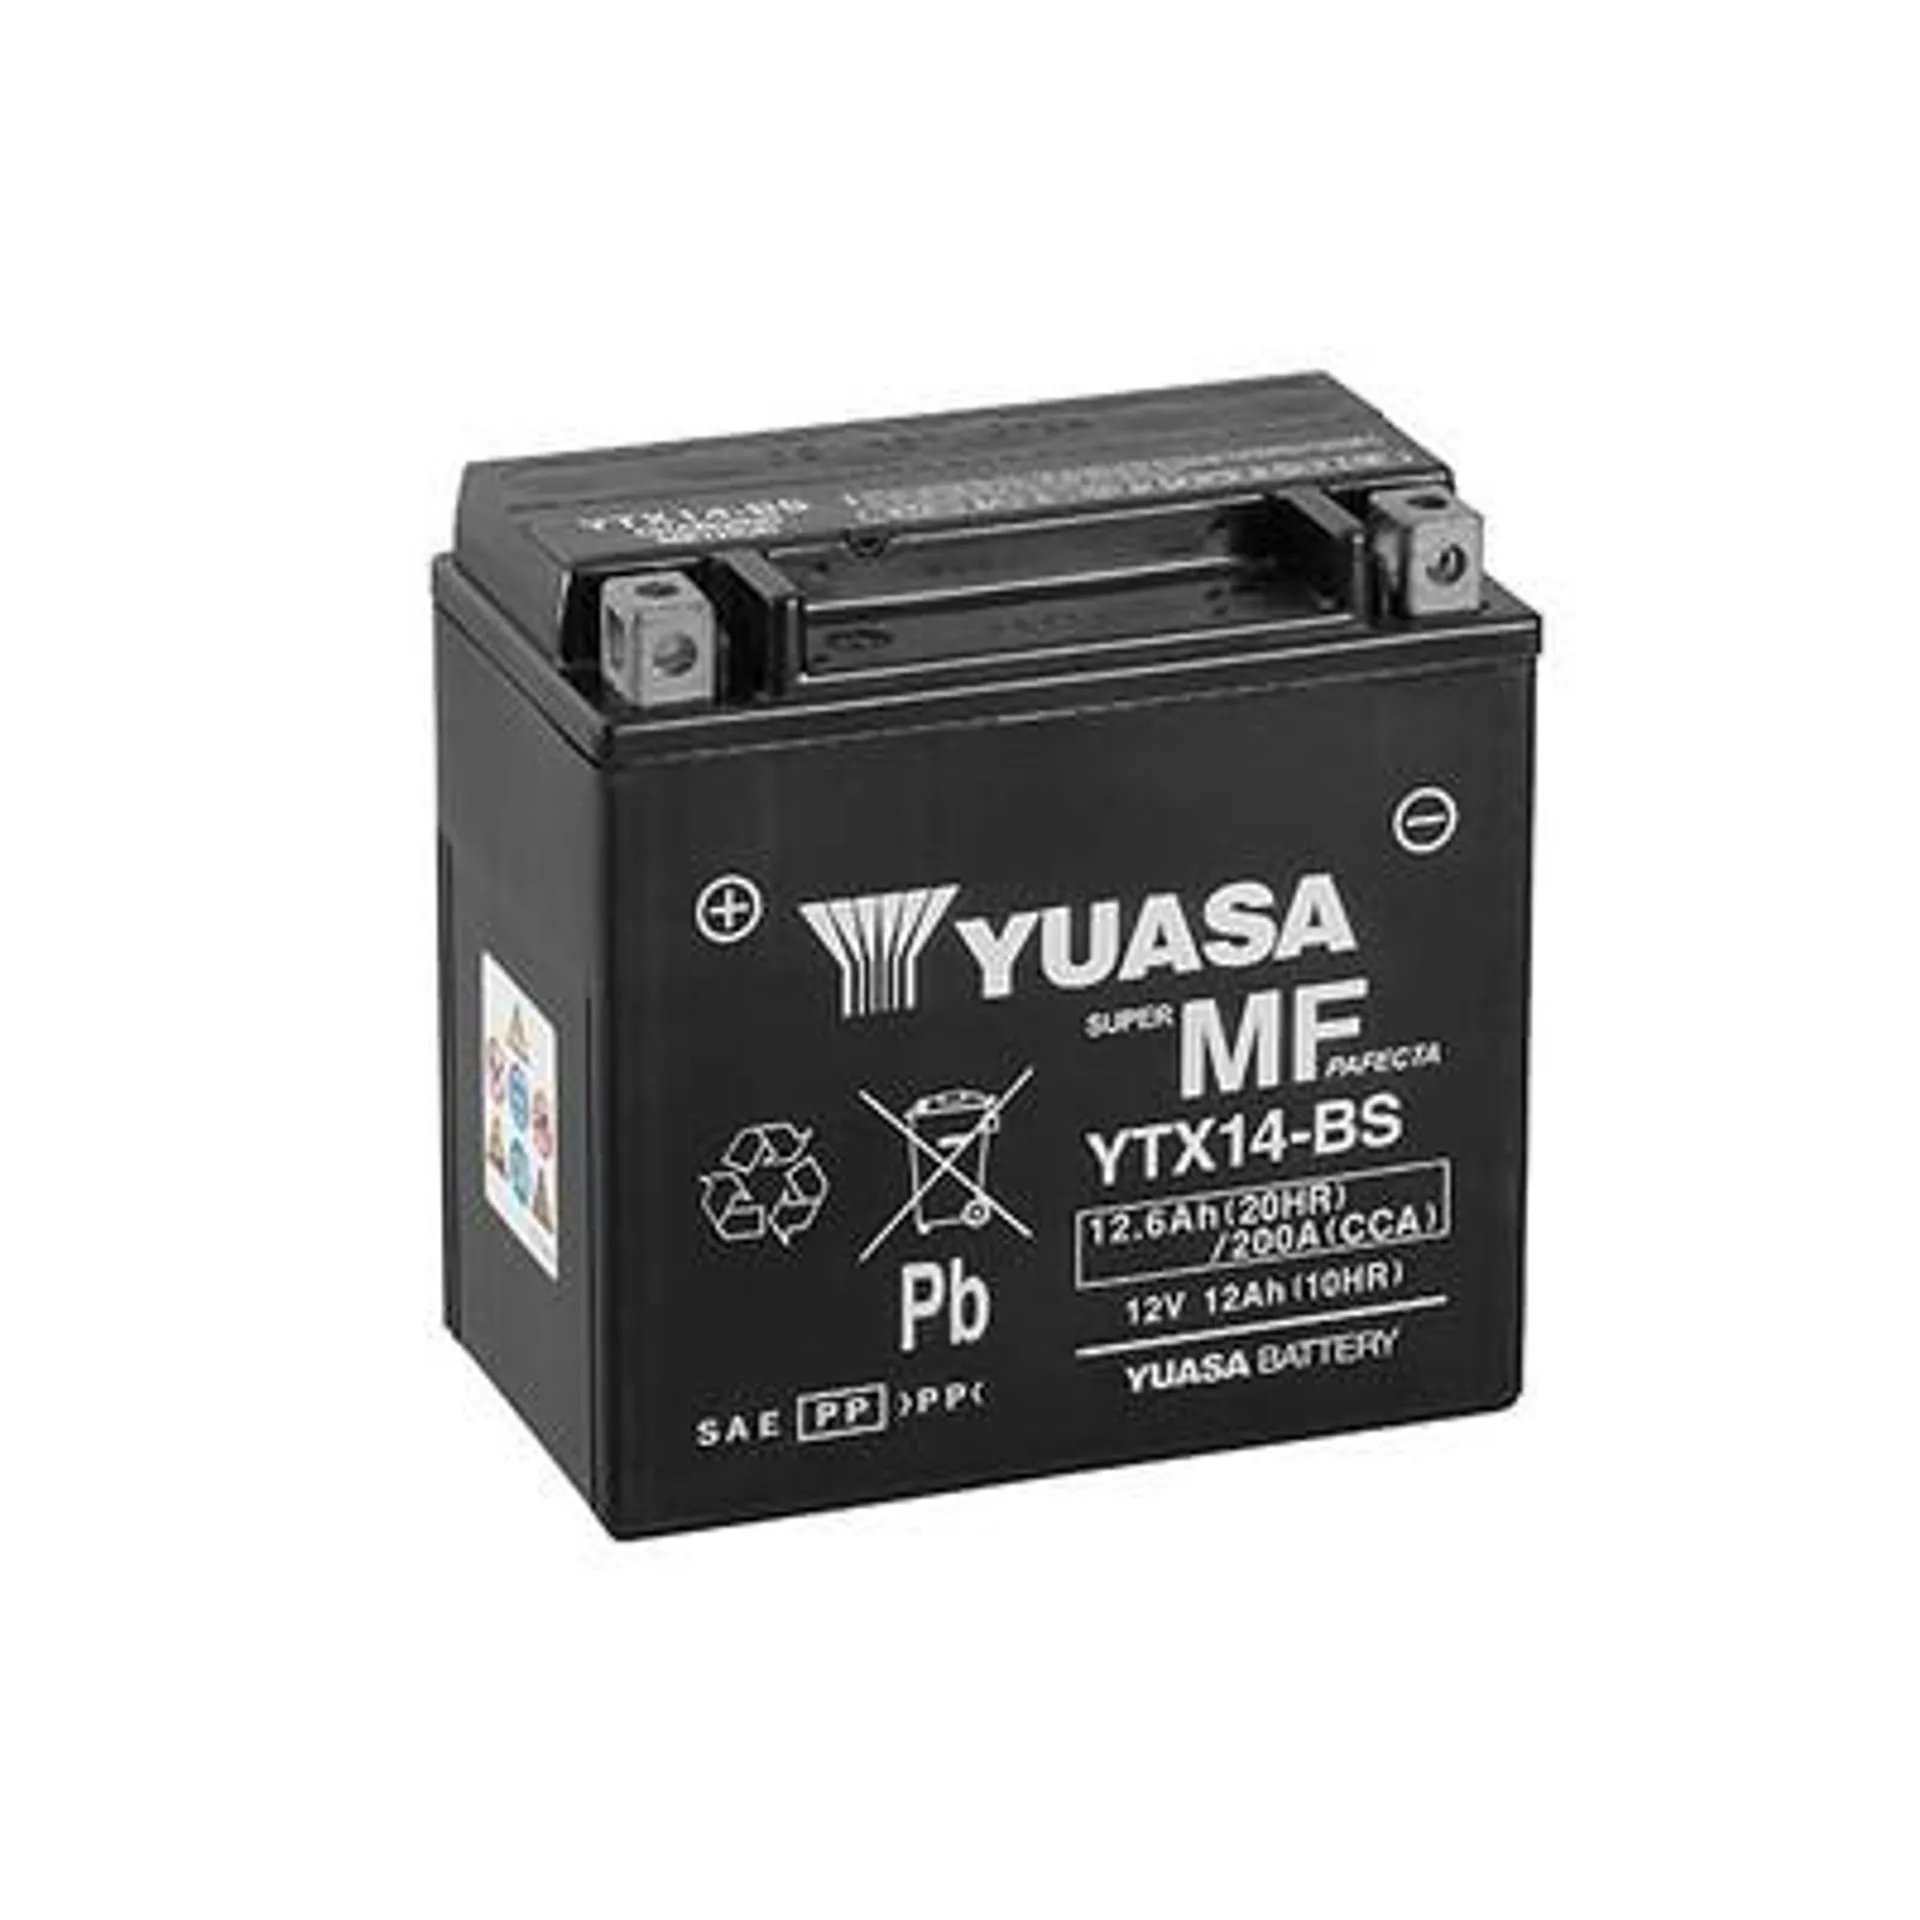 YTX14-BSY Yuasa Motorcycle Battery